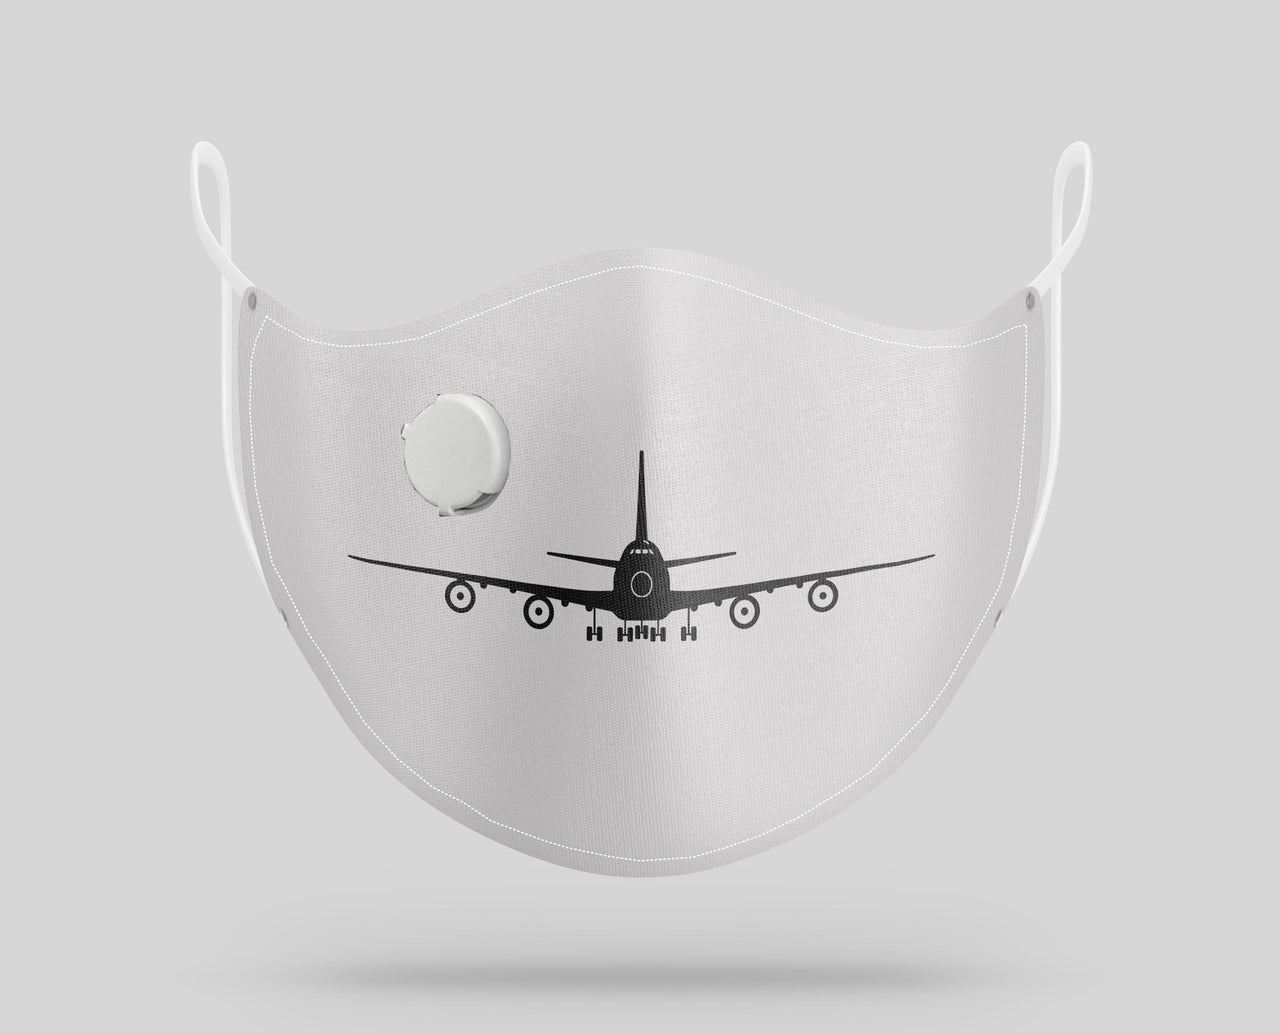 Boeing 747 Silhouette Designed Face Masks